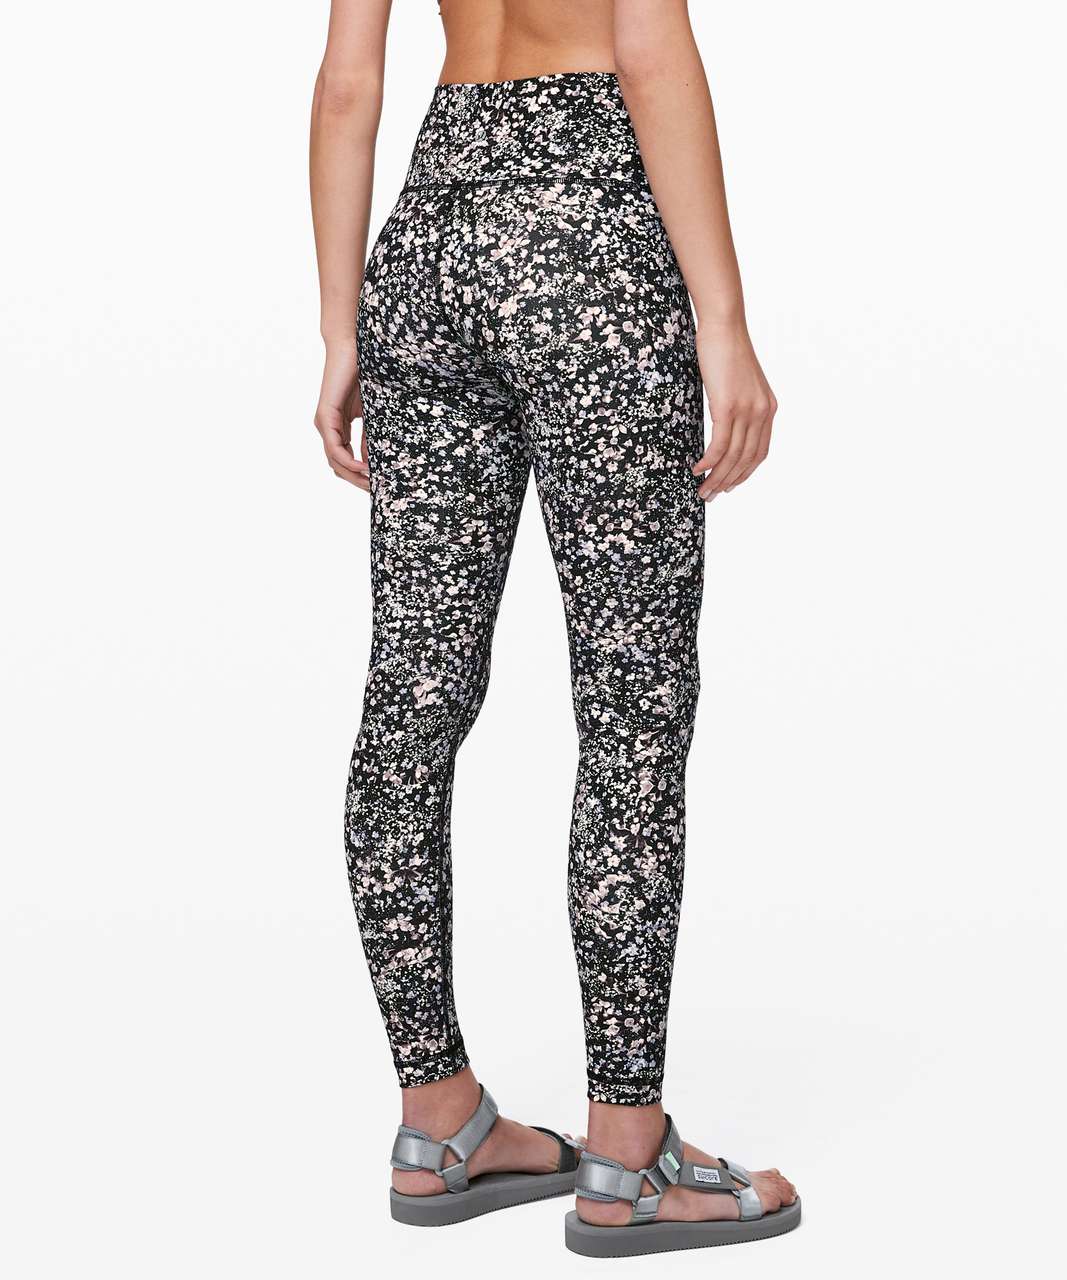 Lululemon Wunder Under leggings 28” inseam size 6 thick leggings Black -  $54 (54% Off Retail) - From Discount